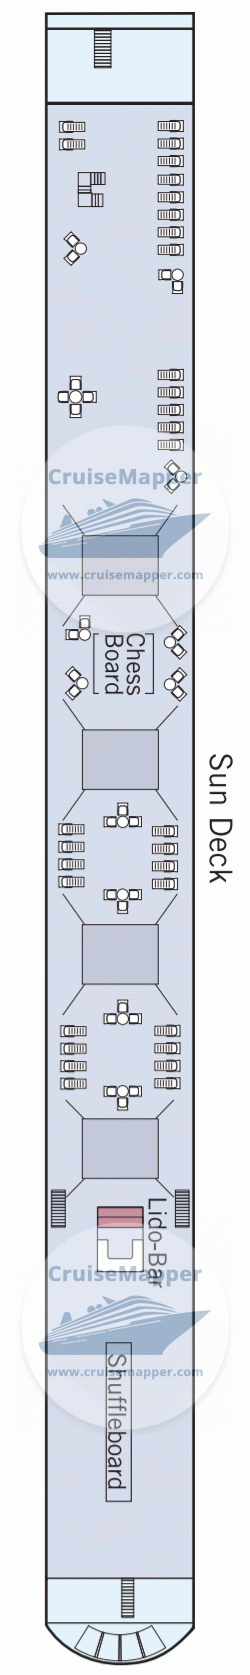 MS Amadeus Silver III Deck 04 - Sundeck